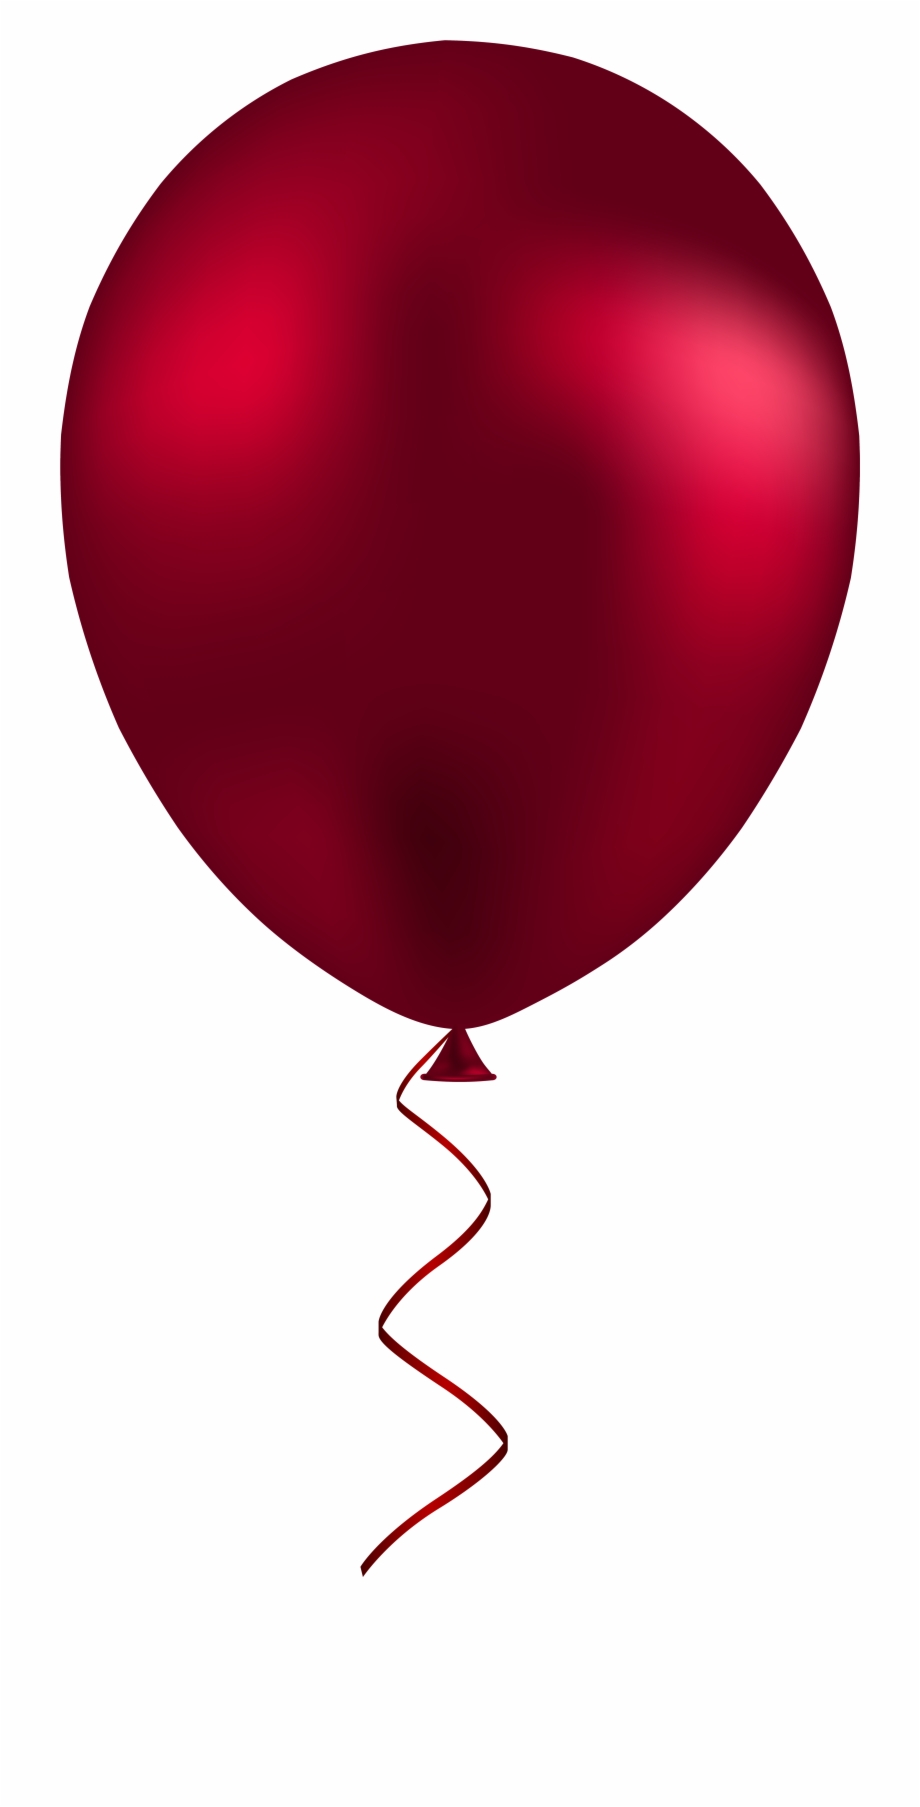 Free Balloon Png Transparent, Download Free Balloon Png Transparent png ...